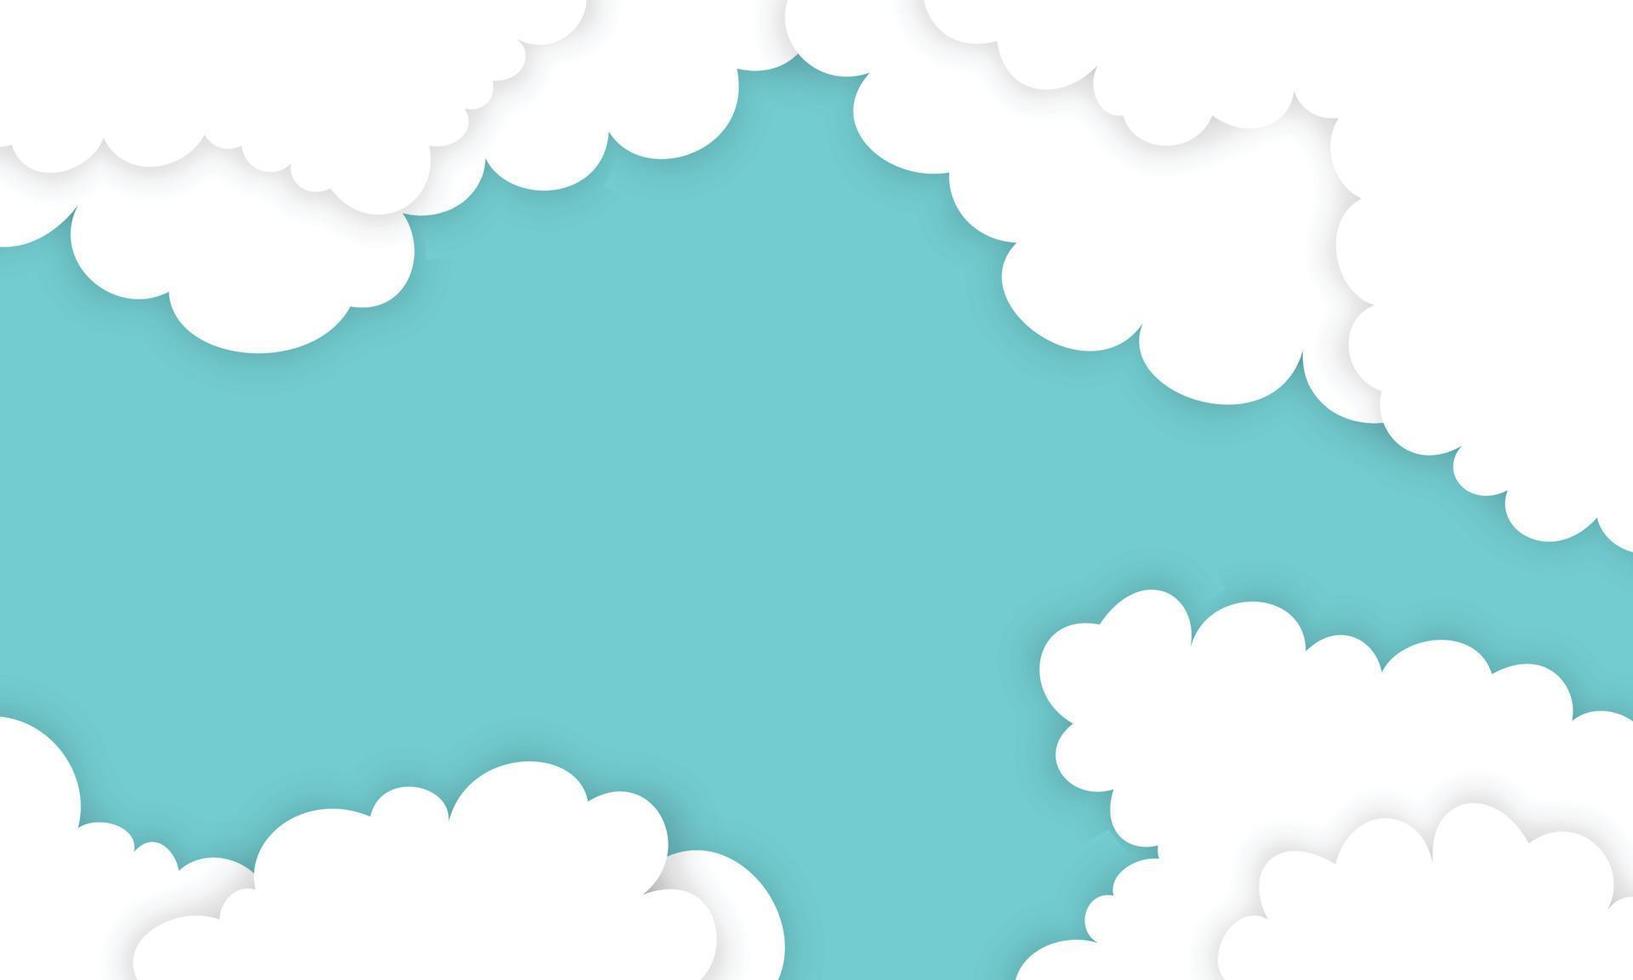 vitt moln i pappersstilar på blå bakgrund. vektor